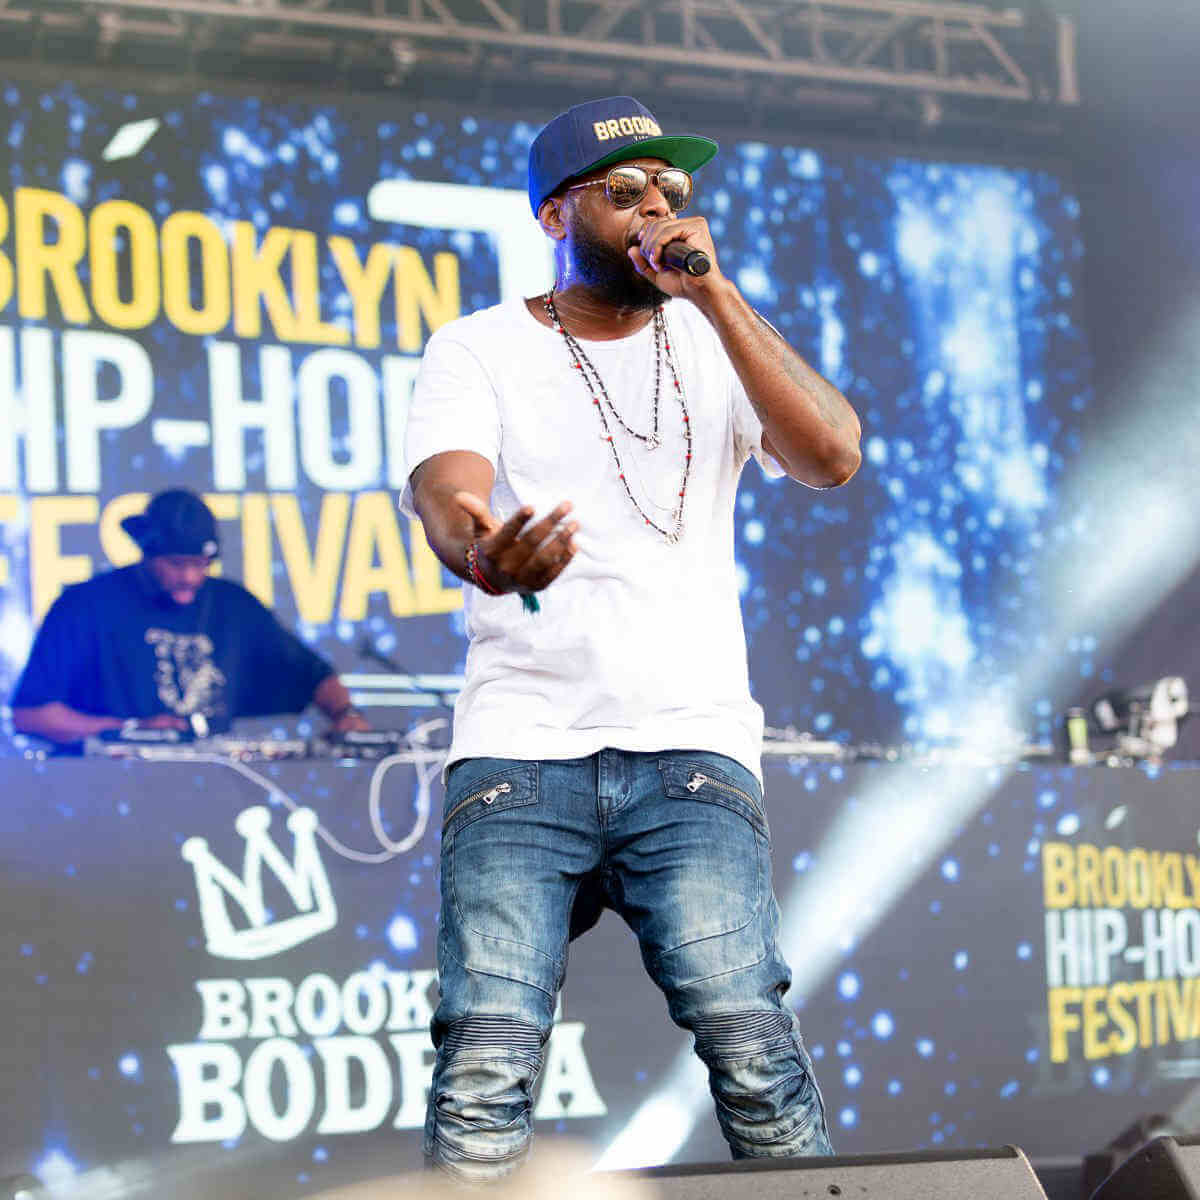 dtg-bb-brooklyn-hip-hop-fest-2018-07-20-bk01_z